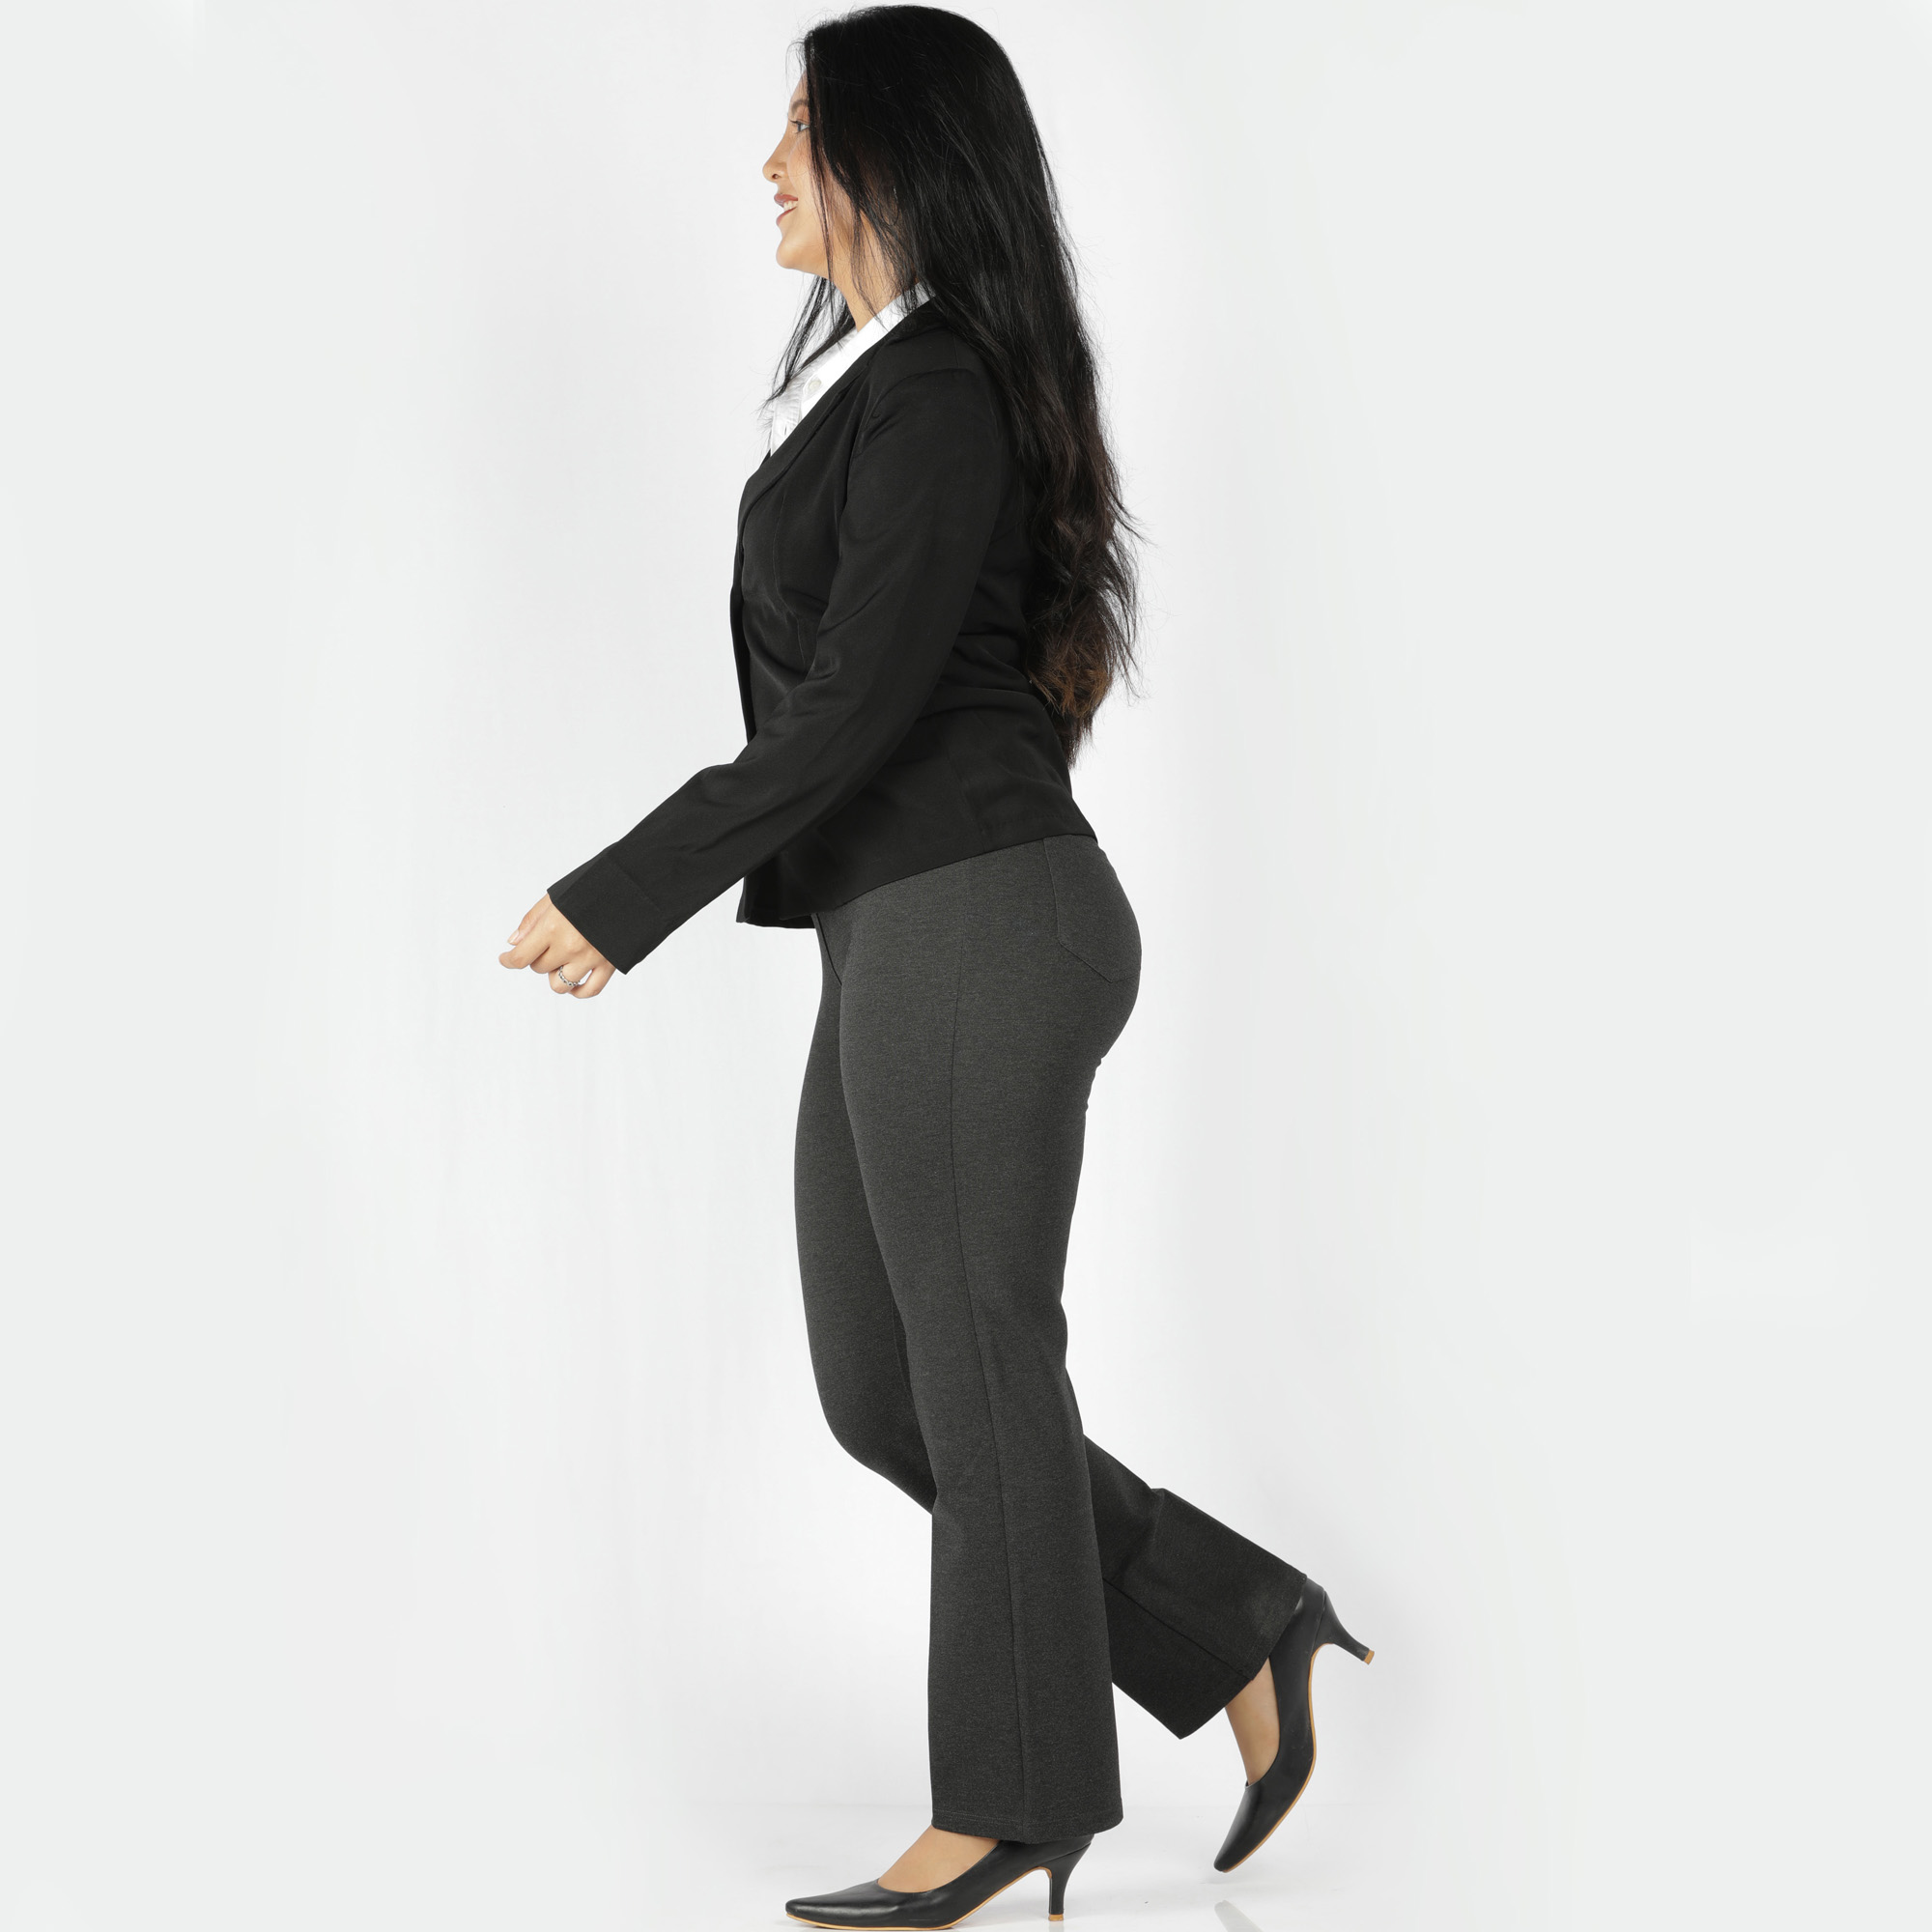 Charcoal grey pants women's - Tummy tucker straight leg-2 bk pkts - Belore  Slims